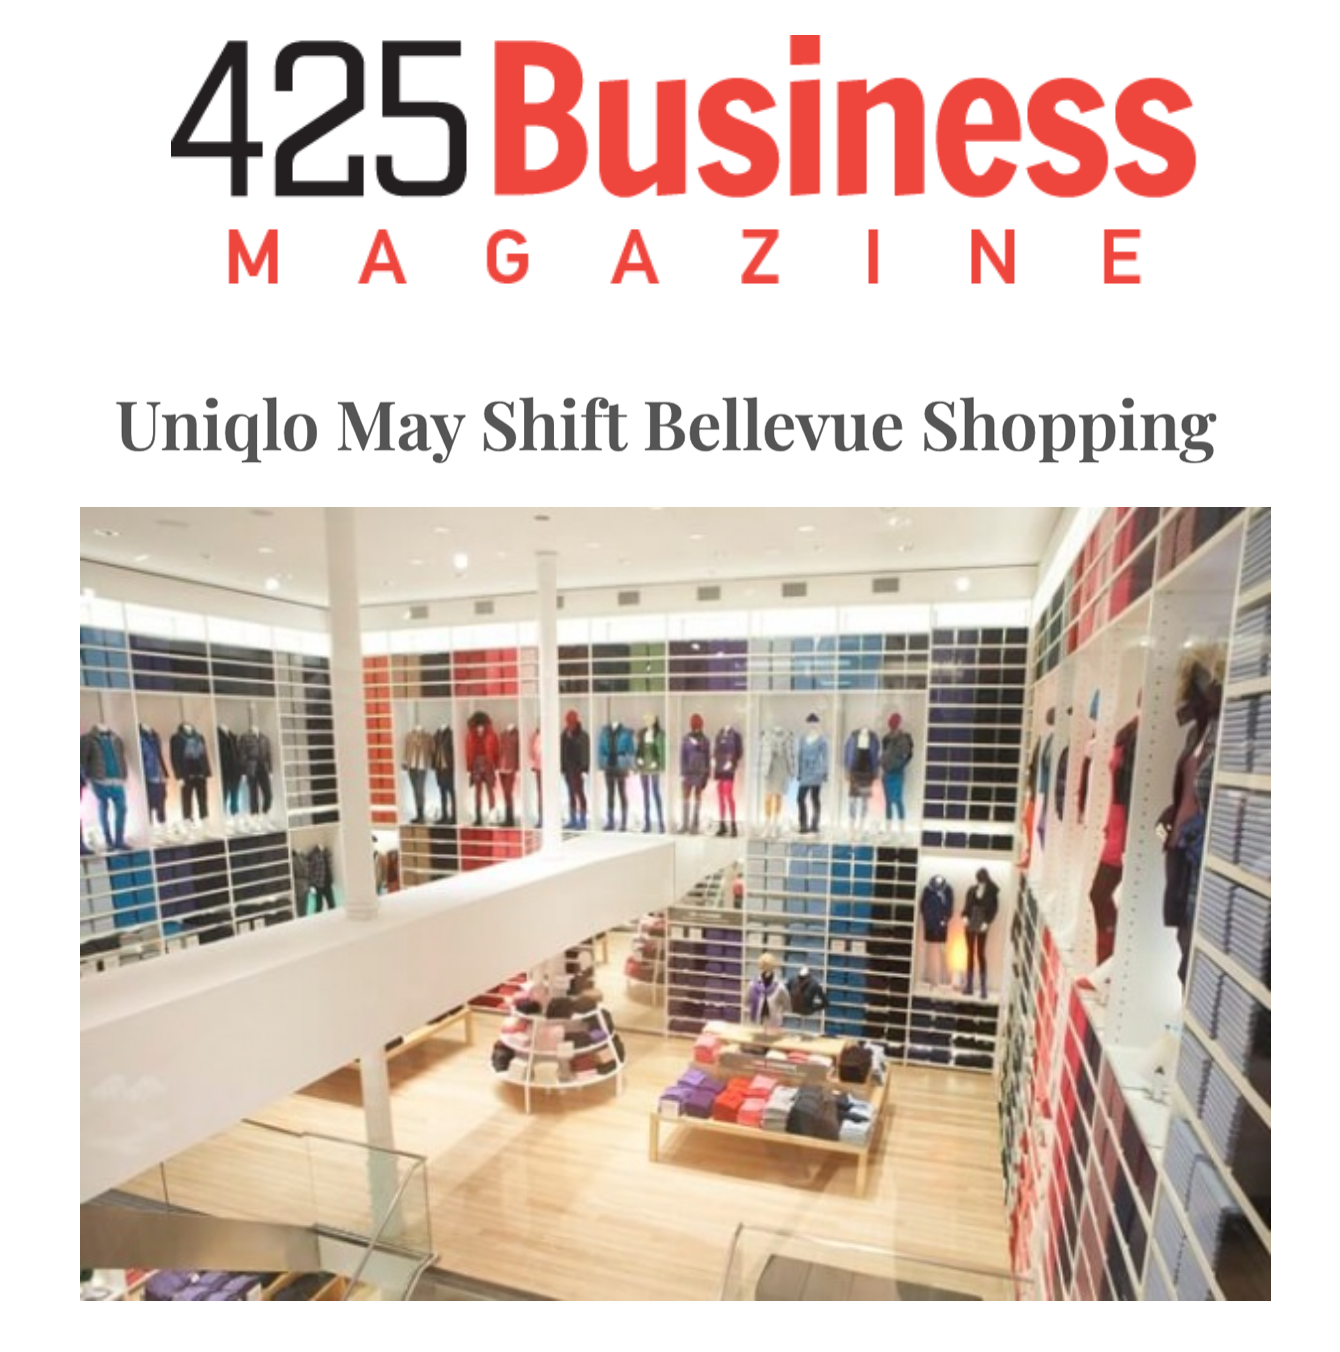 425 business - sydney mintle - uniqlo quote.png